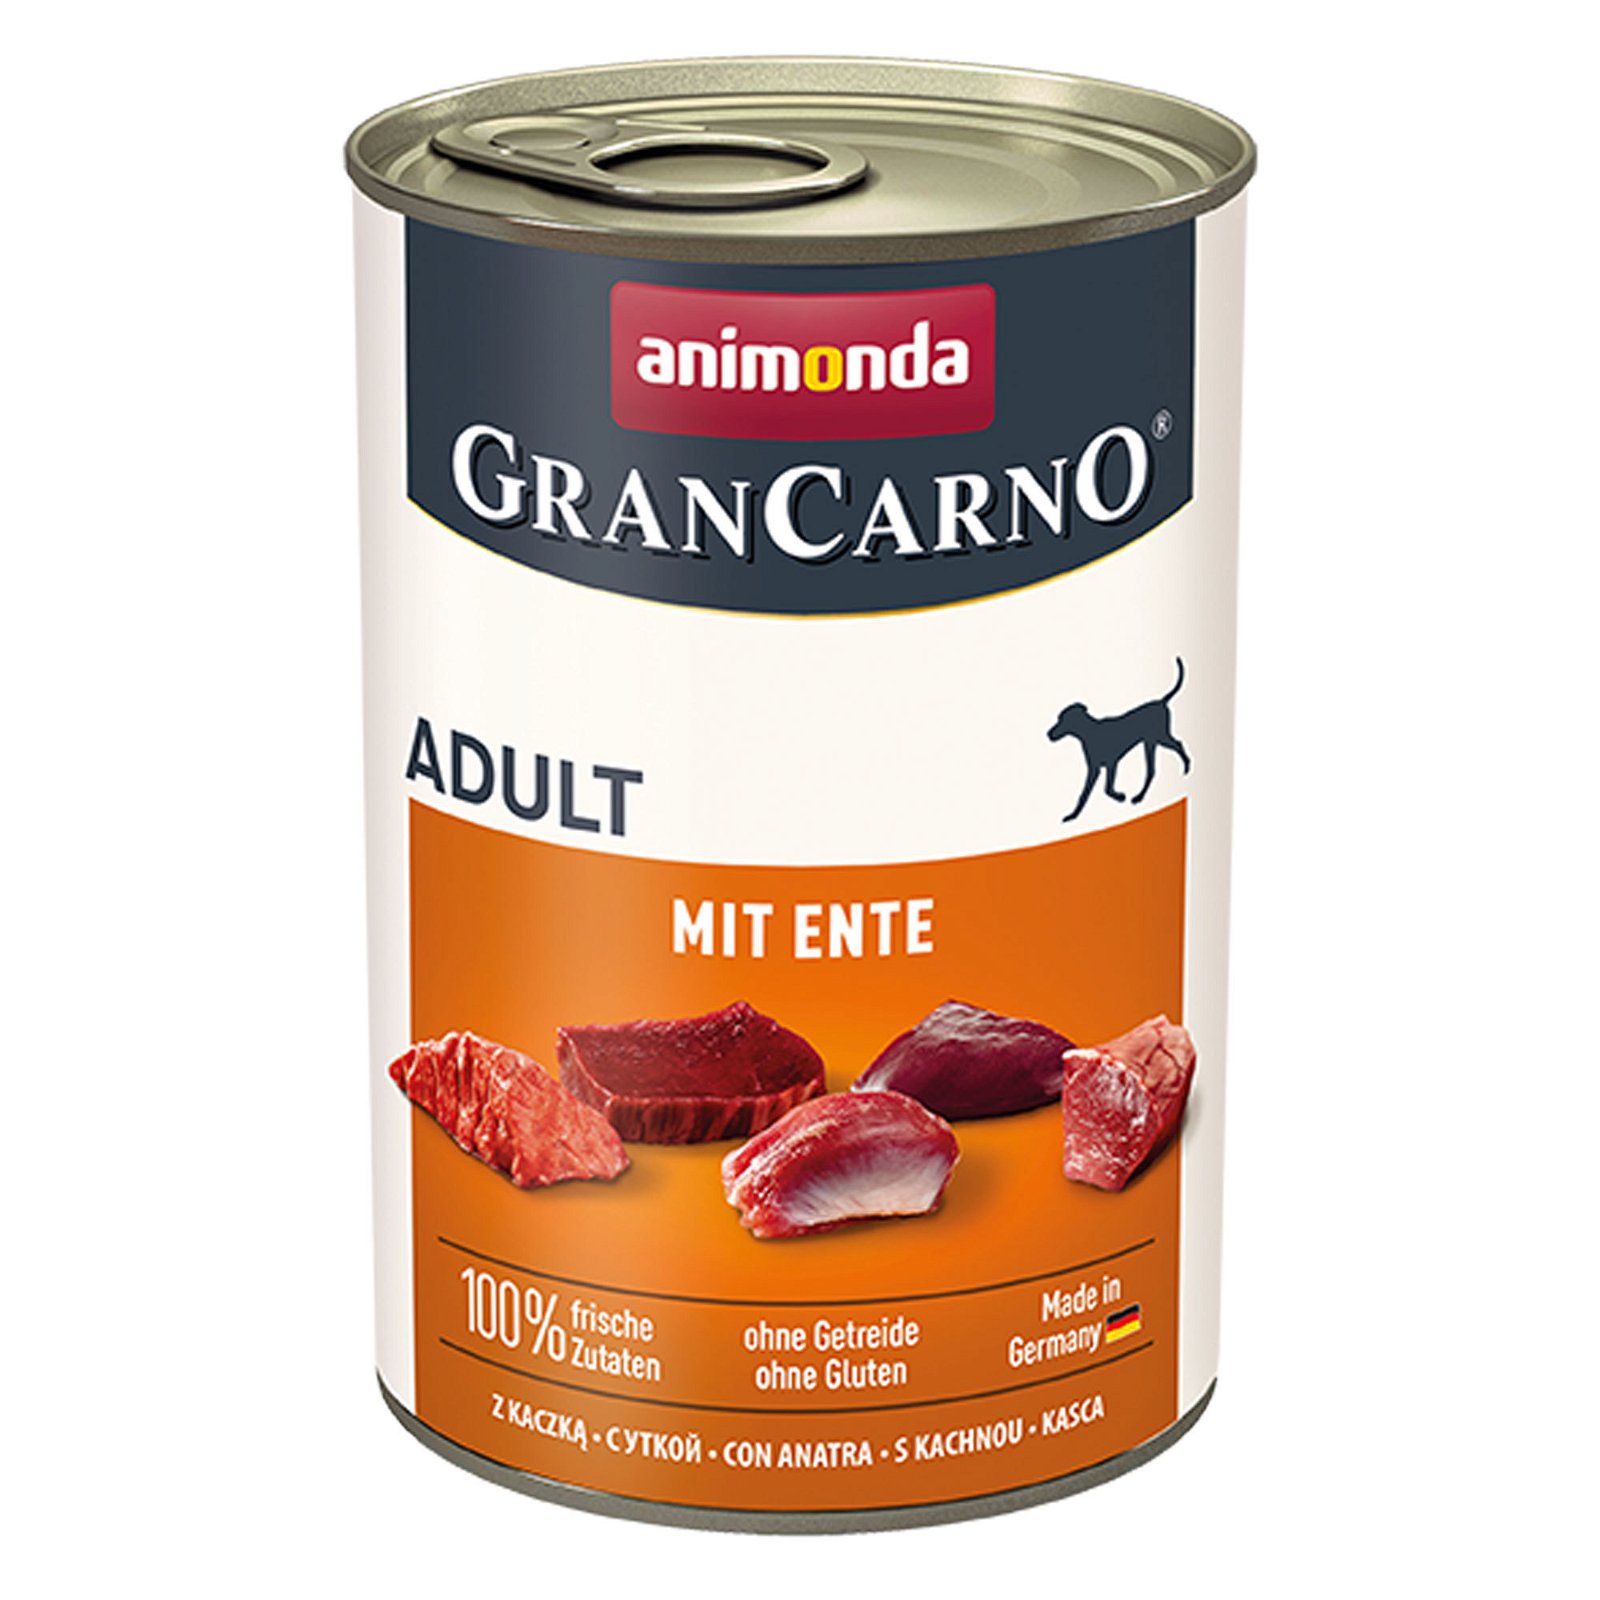 Animonda Gran Carno Adult mit Ente, 400 g